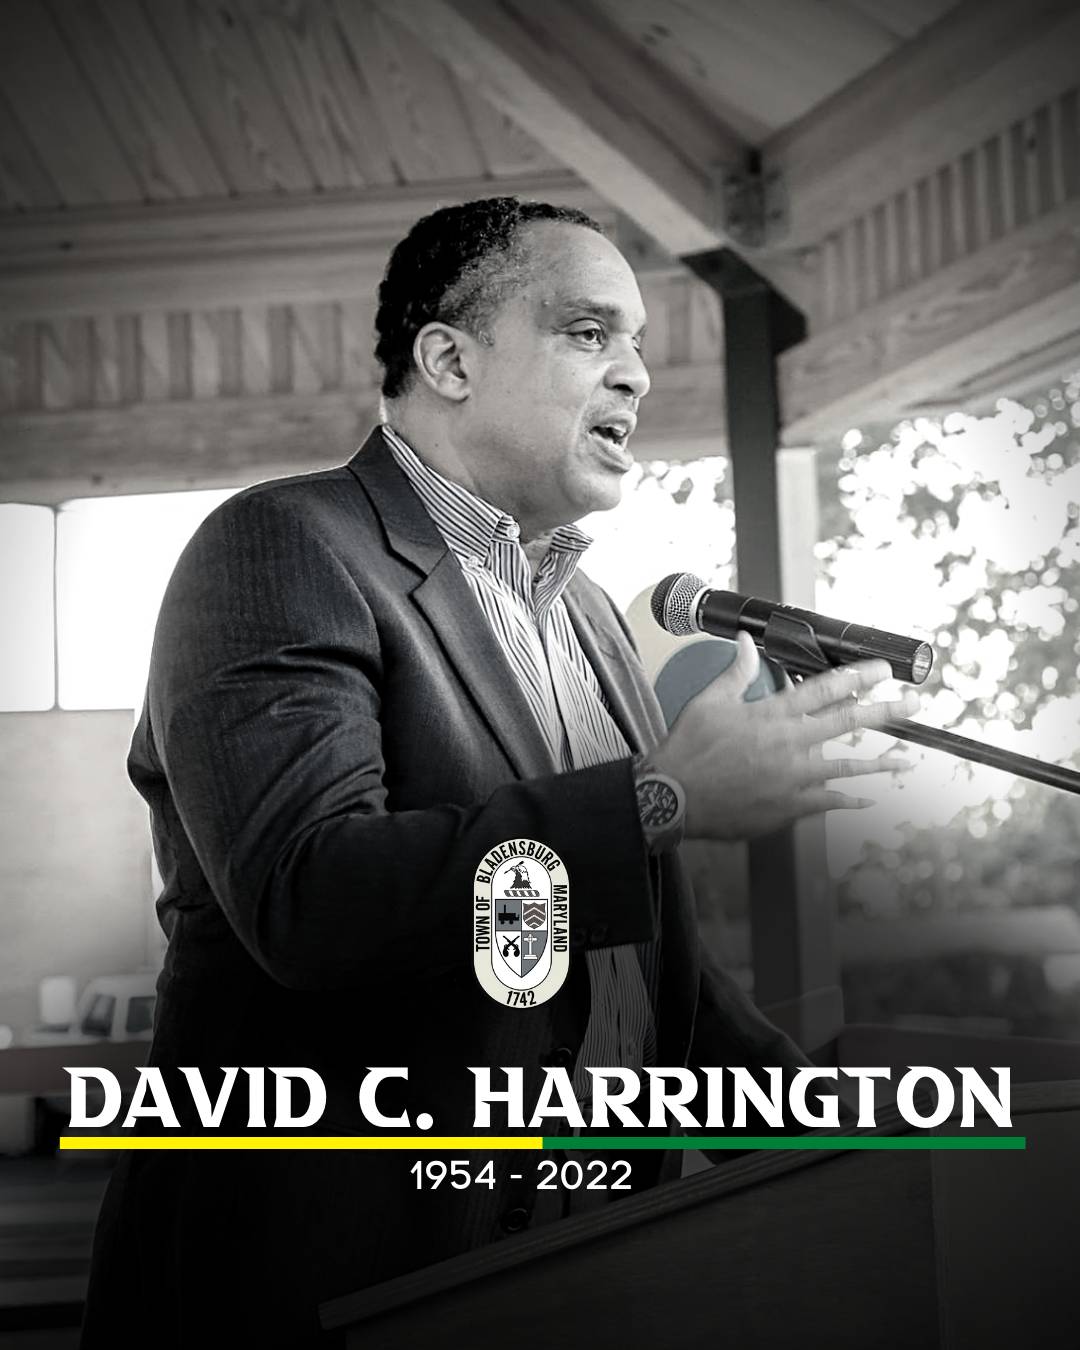 DAVID C. HARRINGTON - Copy (3)